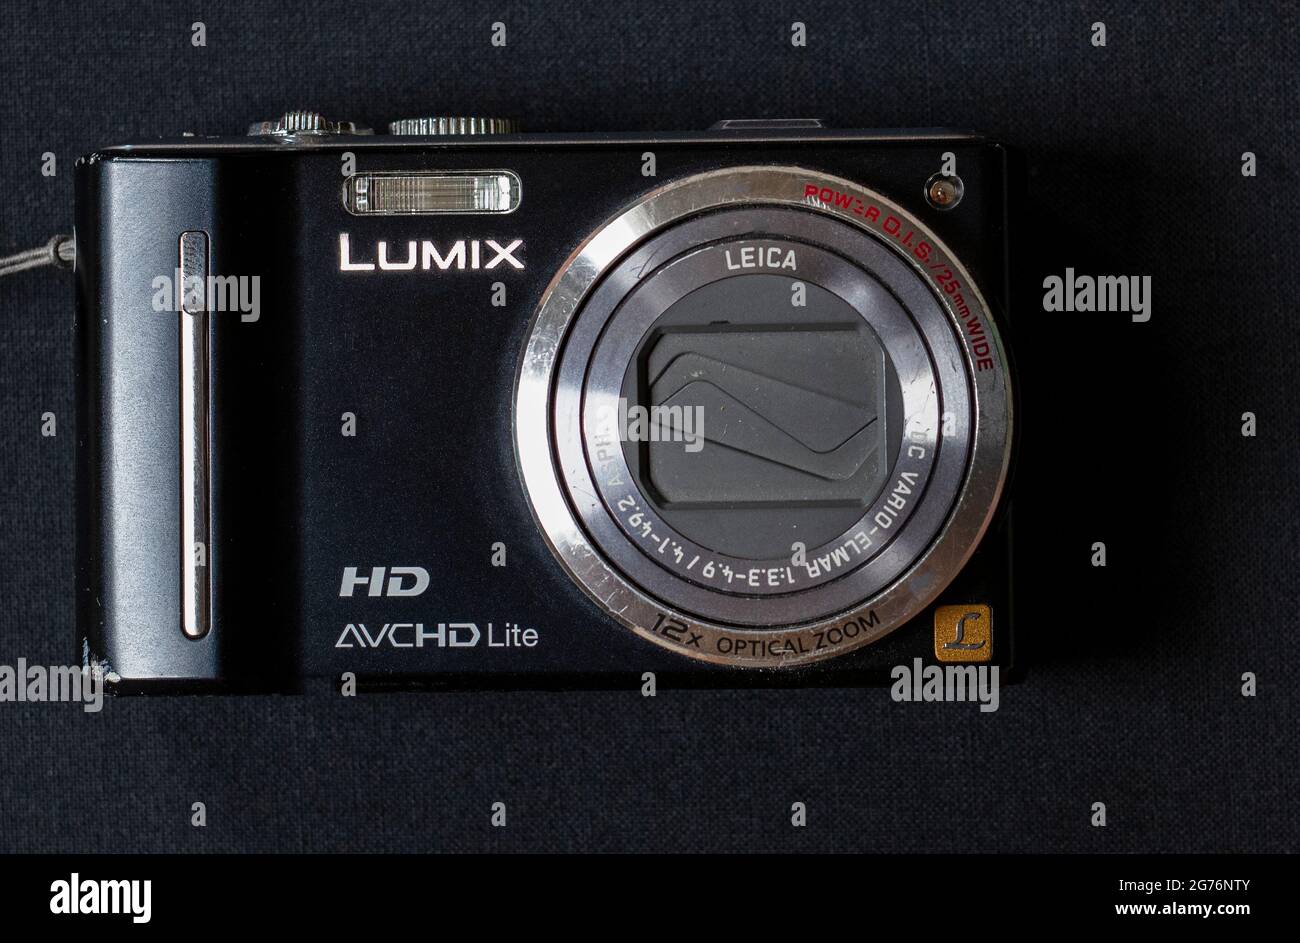 Appareil photo numérique compact Panasonic Lumix HD AVCHD Lite avec  objectif Leitz Leica Vario-Elmar Photo Stock - Alamy